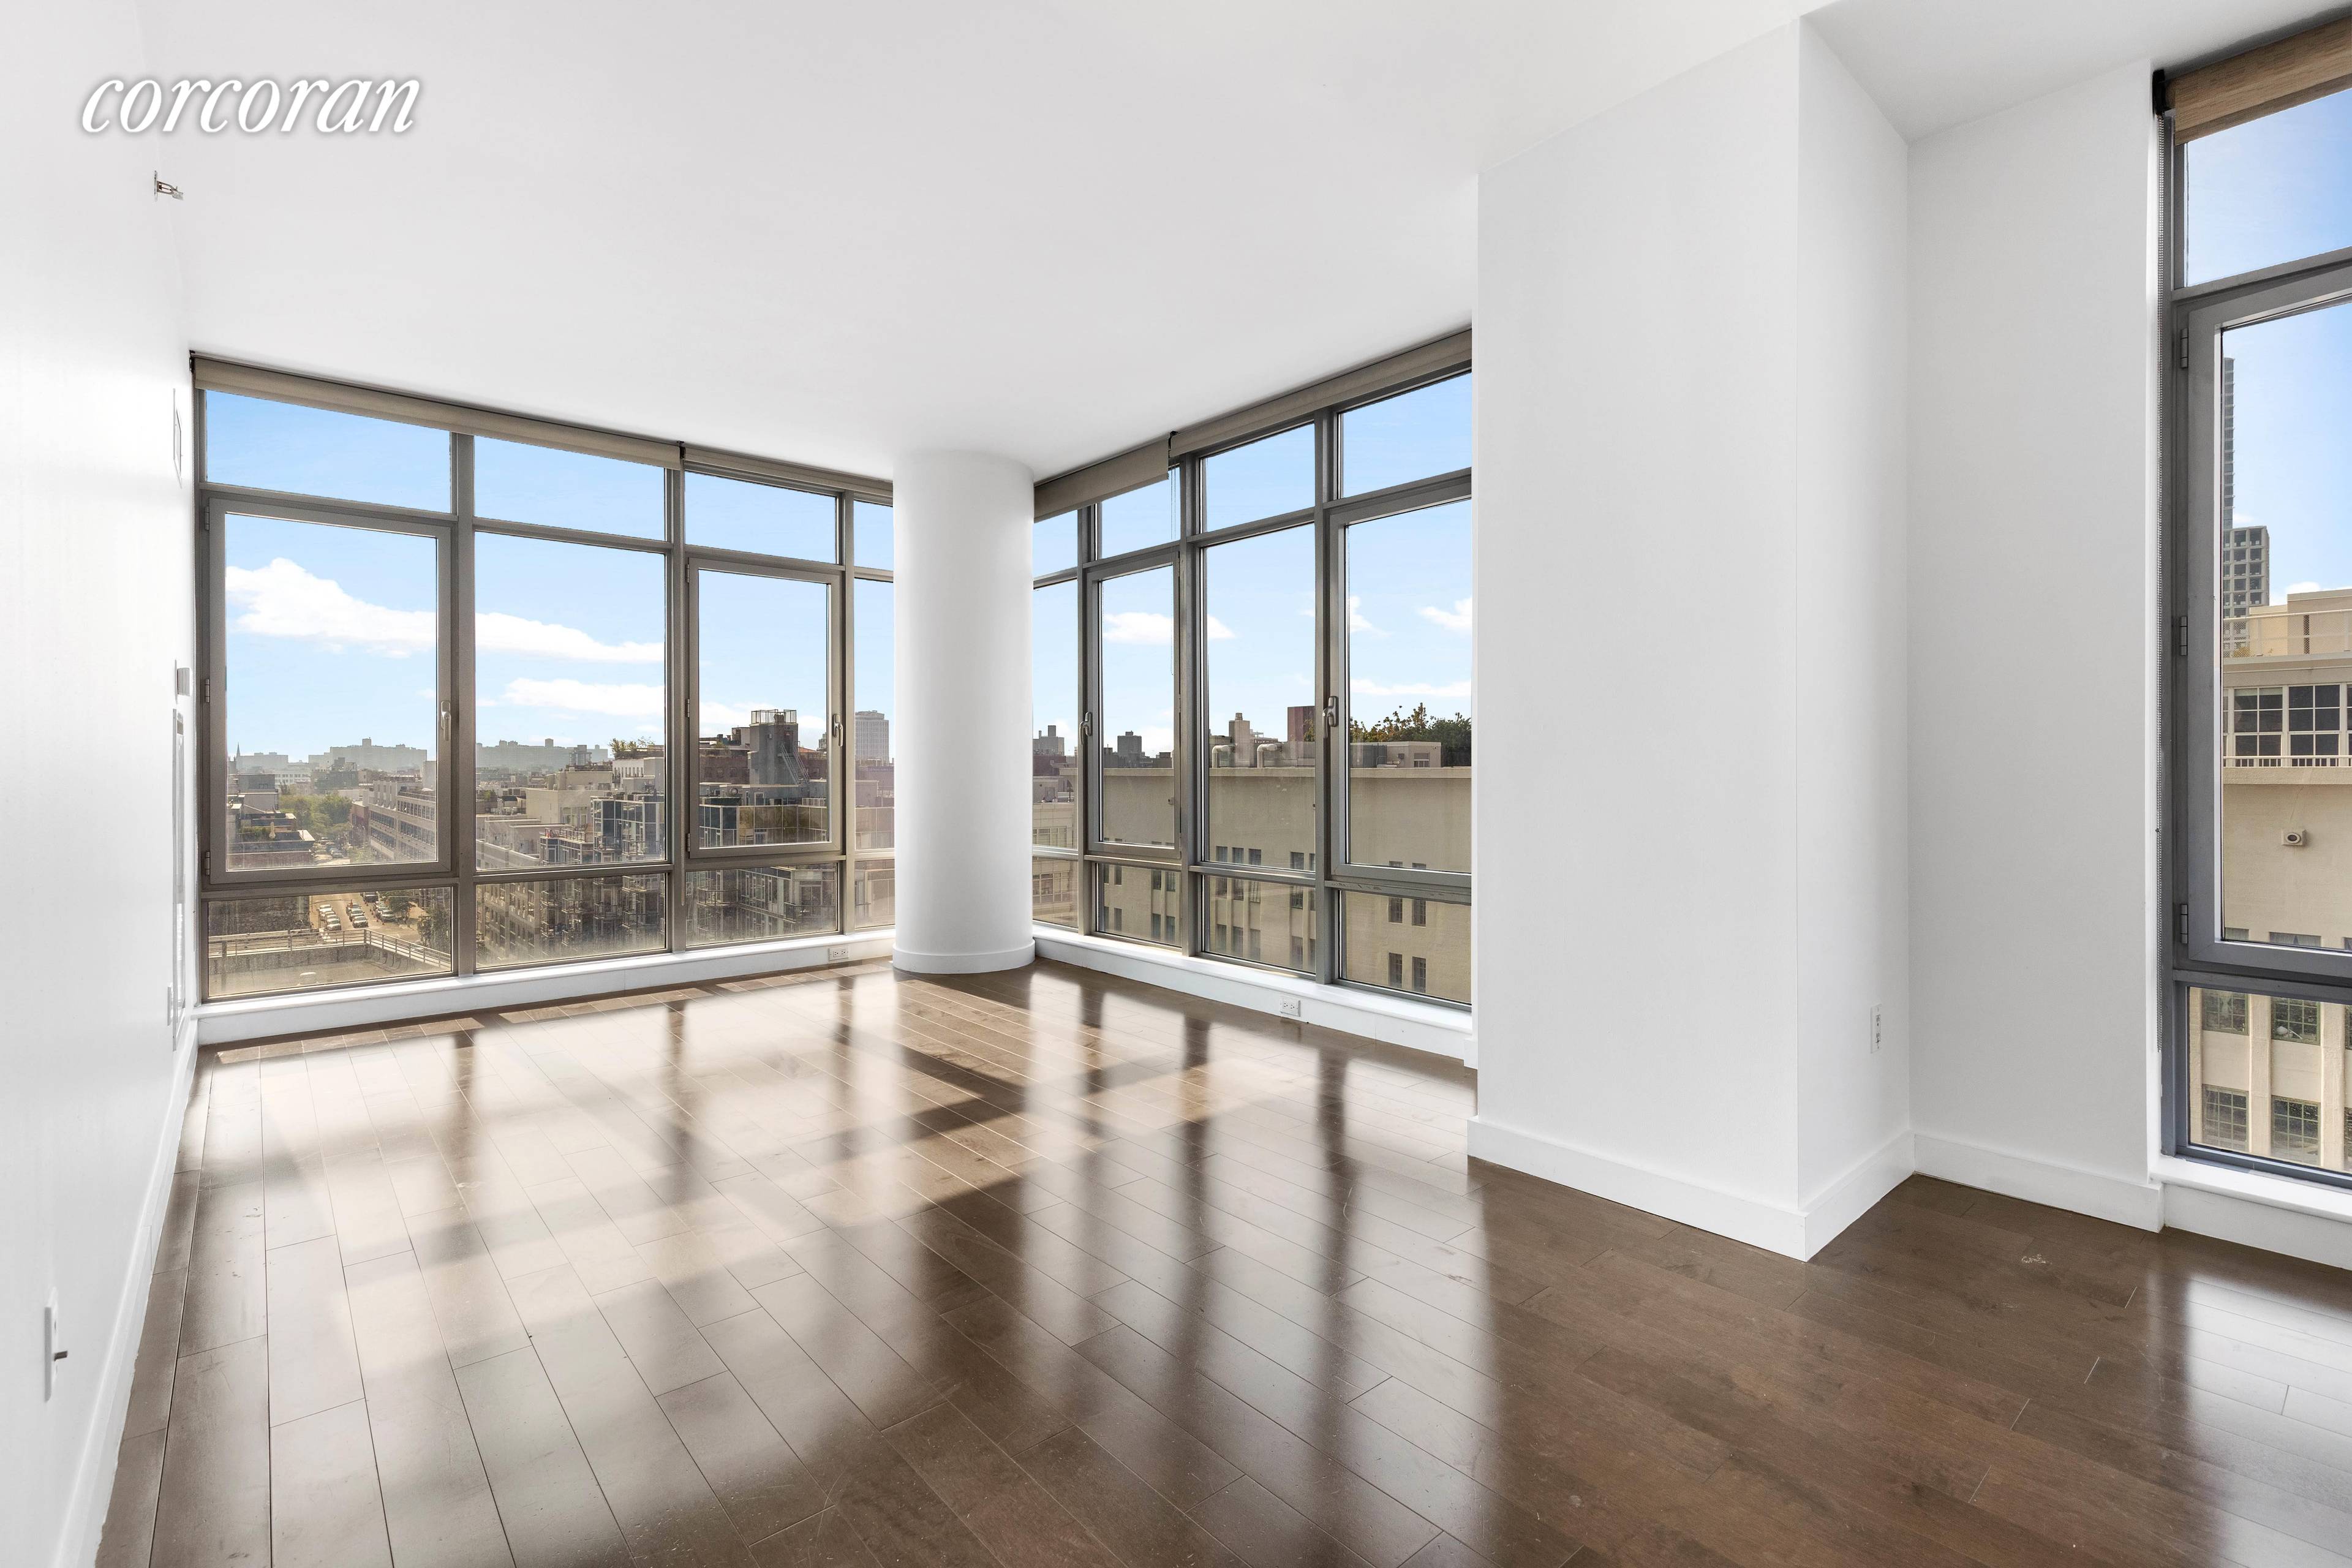 Enjoy open Brooklyn views from this large, corner two bedroom, two bathroom rental condominium at 1 Northside Piers.